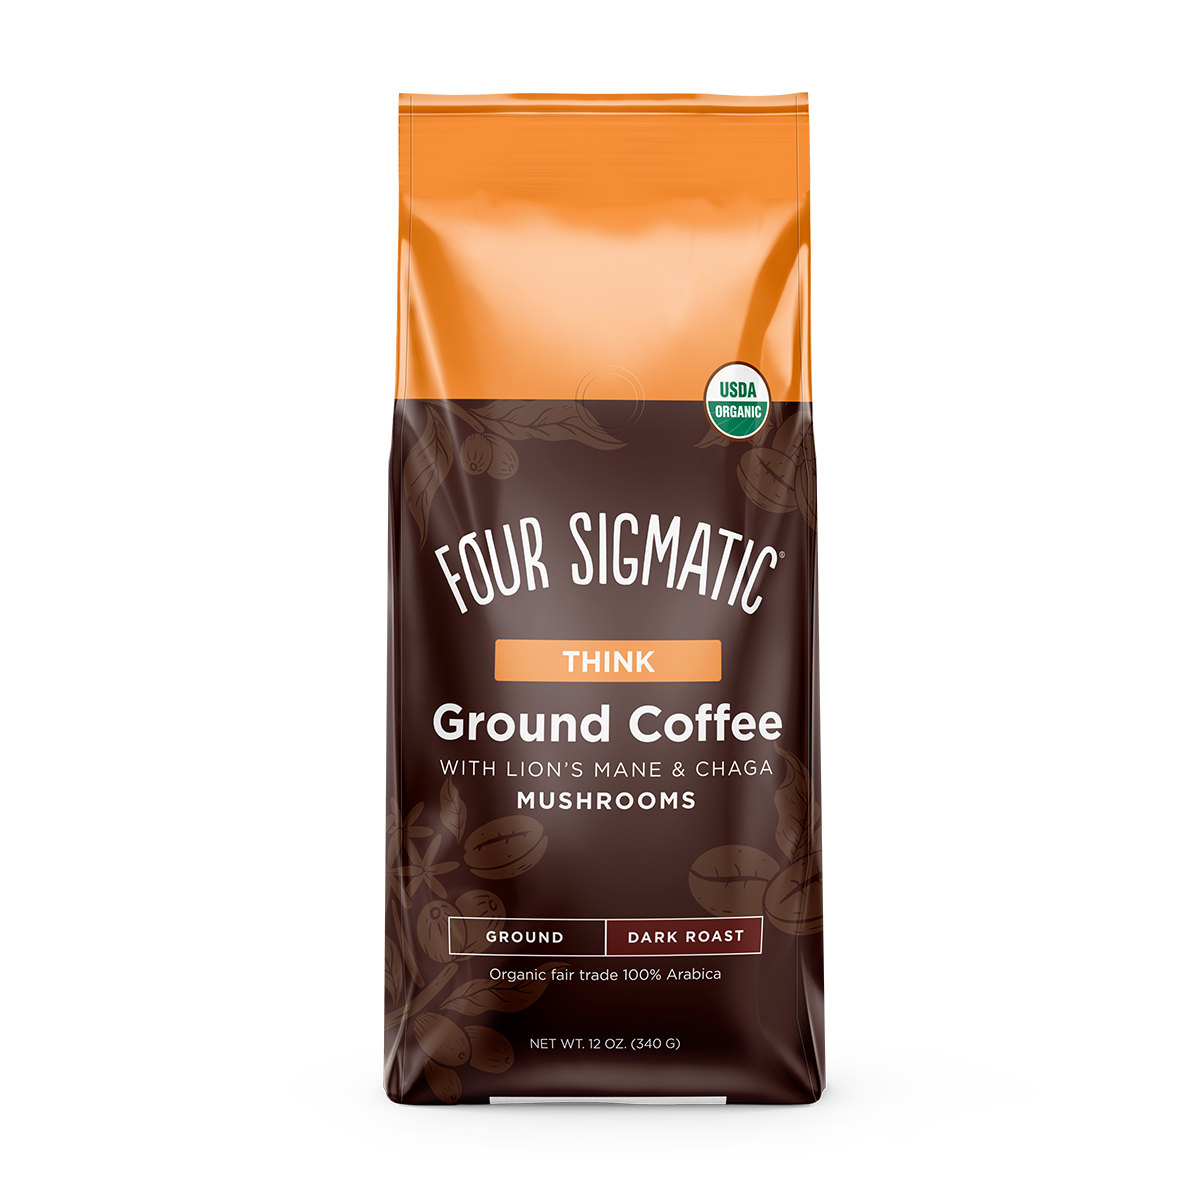 Think Ground Coffee with Lion's Mane & Chaga 8 units per case 12.0 oz